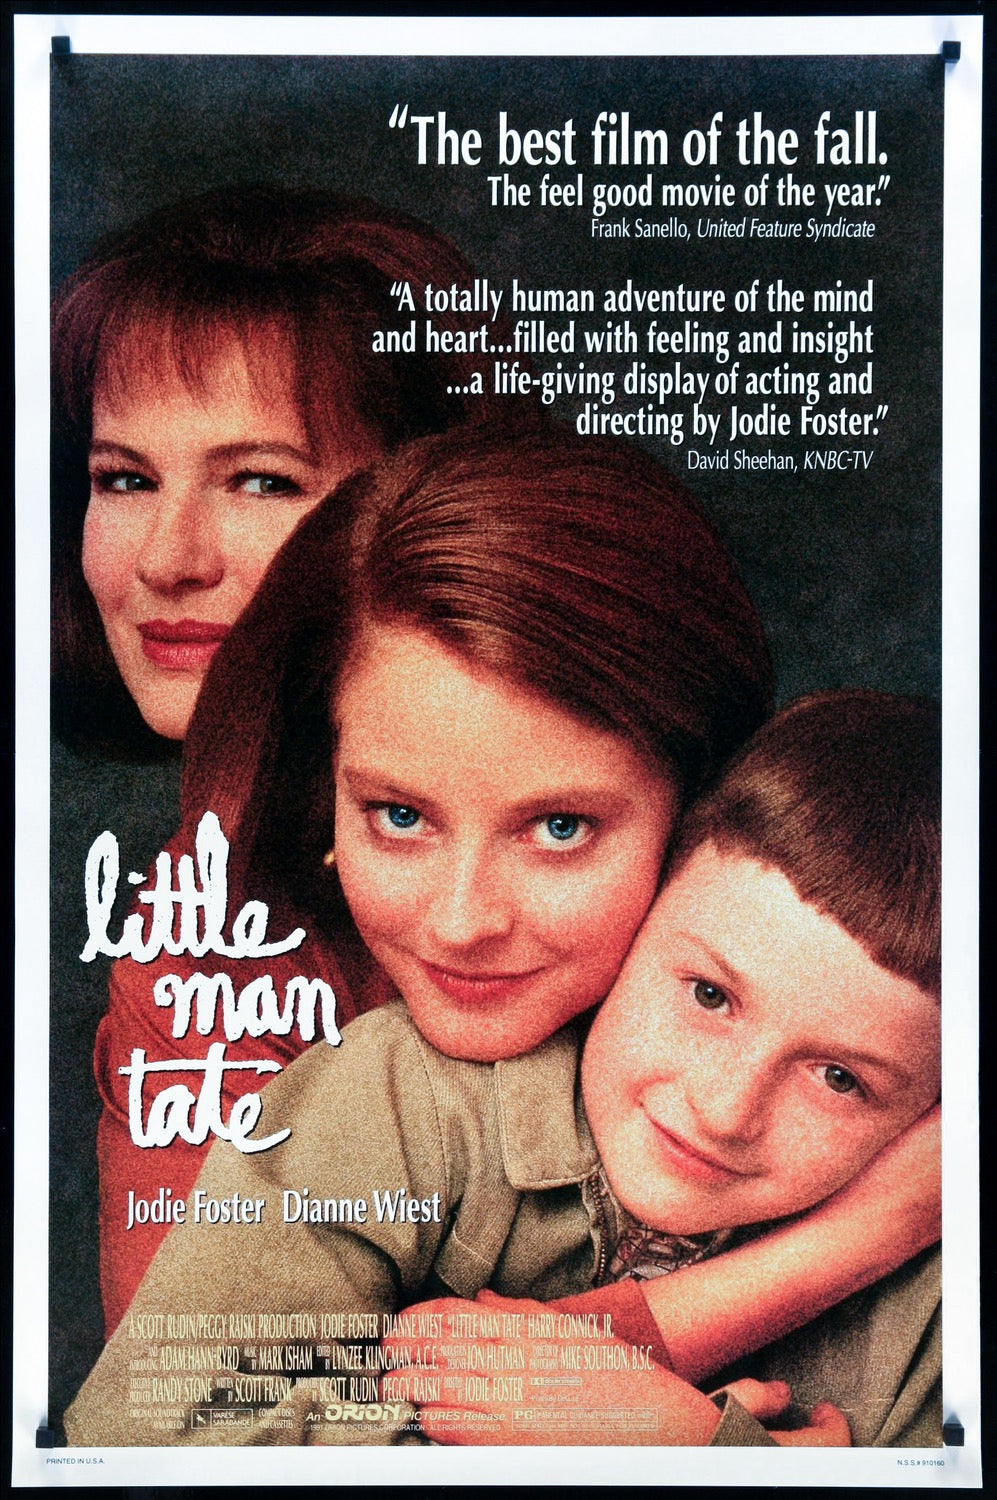 Little Man Tate (1991) original movie poster for sale at Original Film Art